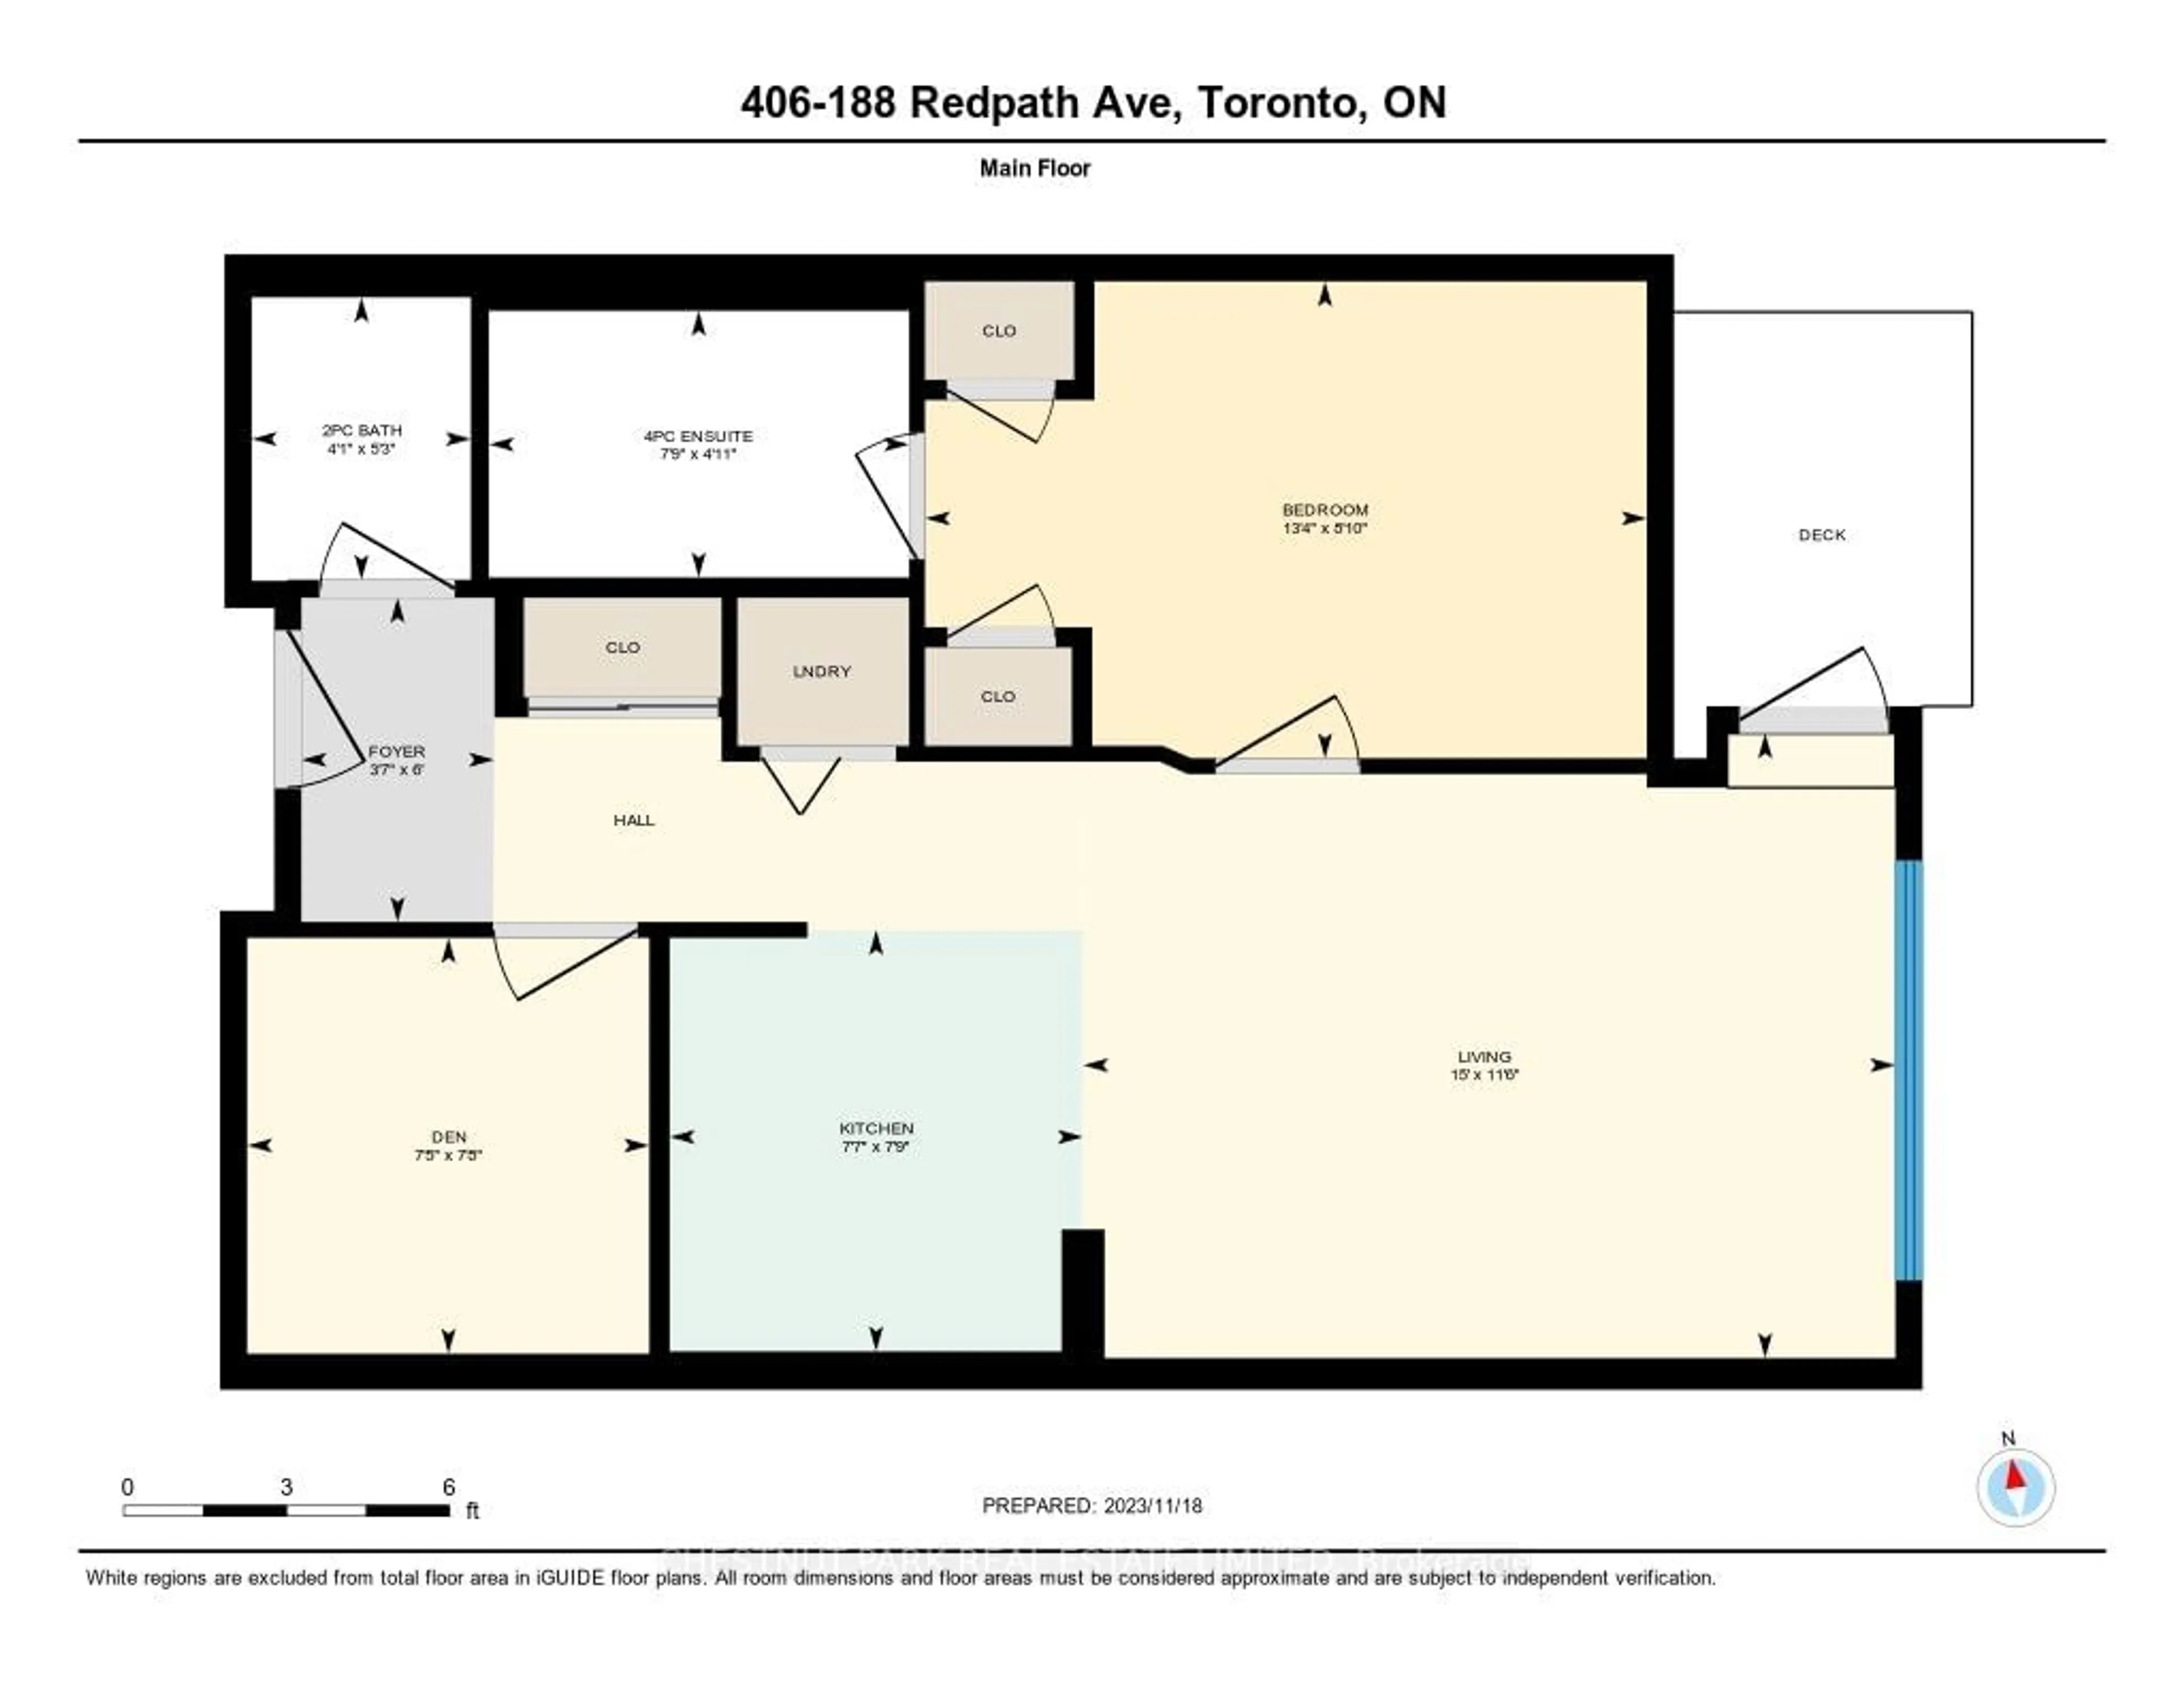 Floor plan for 188 Redpath Ave #406, Toronto Ontario M4P 3J2